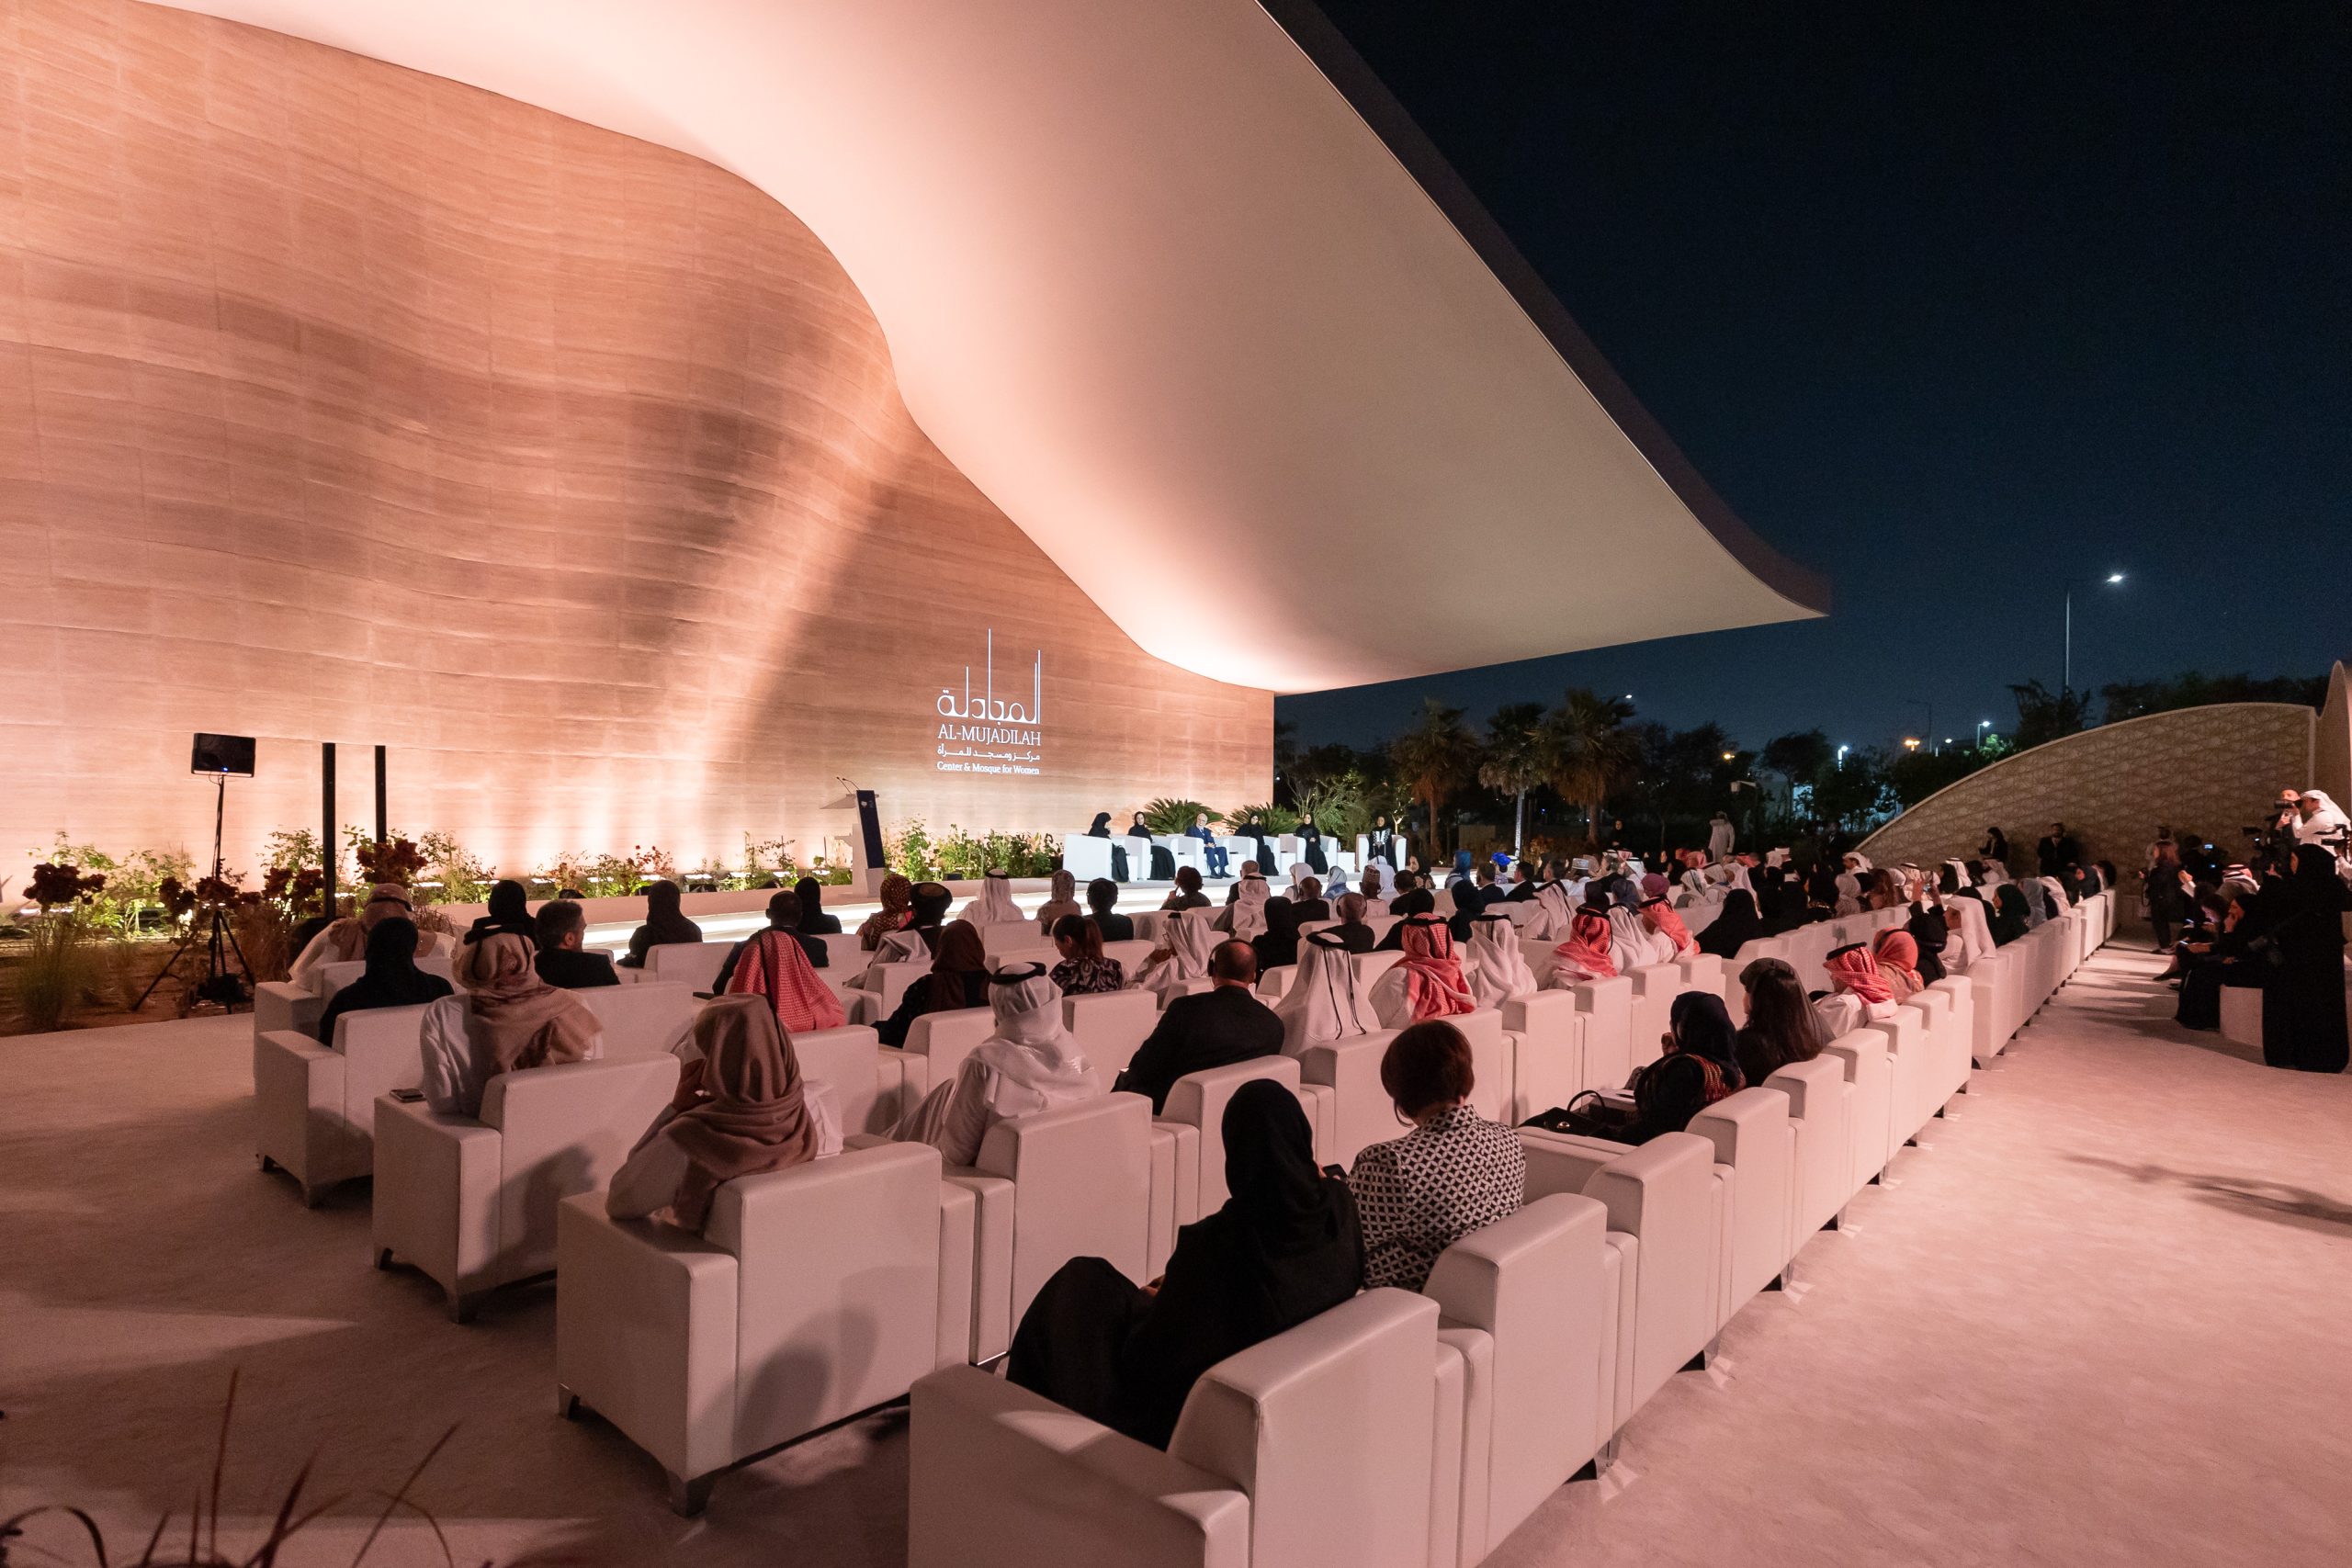 Sheikha Moza inaugurates the Al Mujadilah Center and Mosque for Women in Qatar